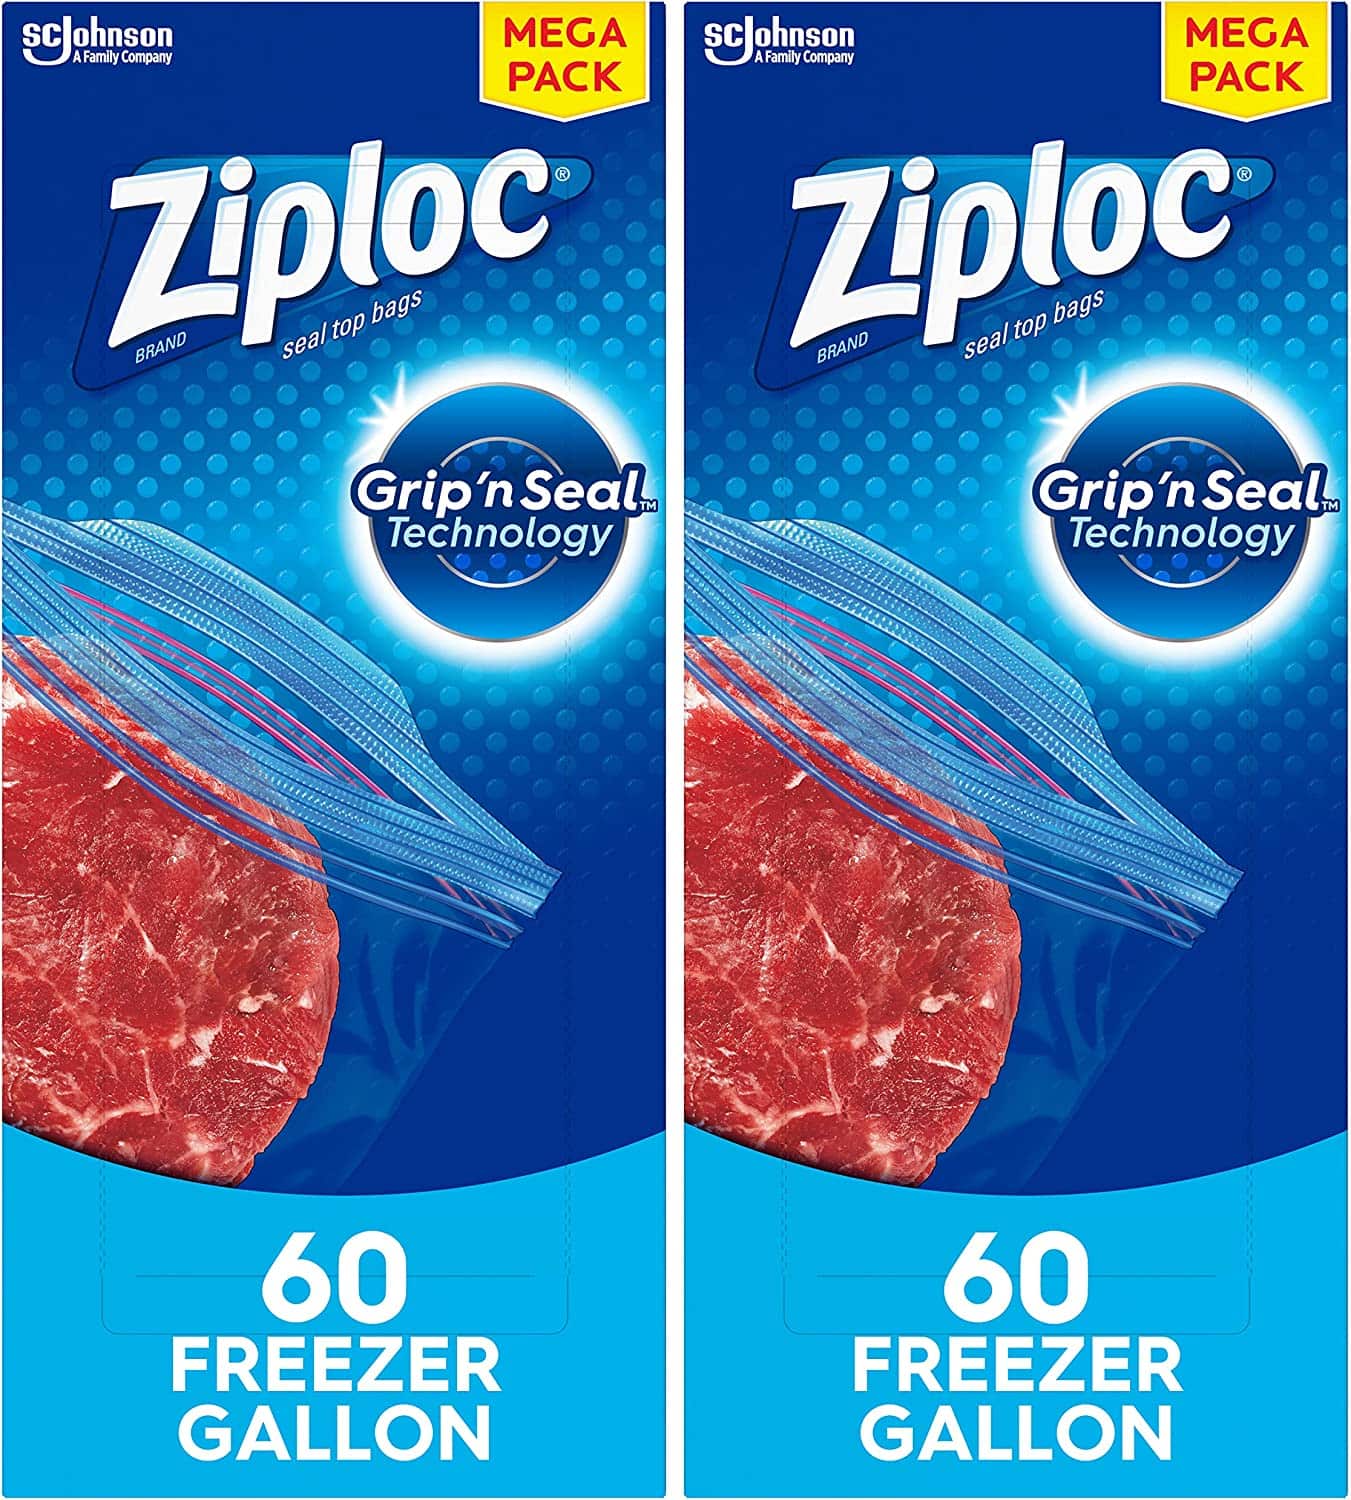 Ziploc Gallon Freezer bags